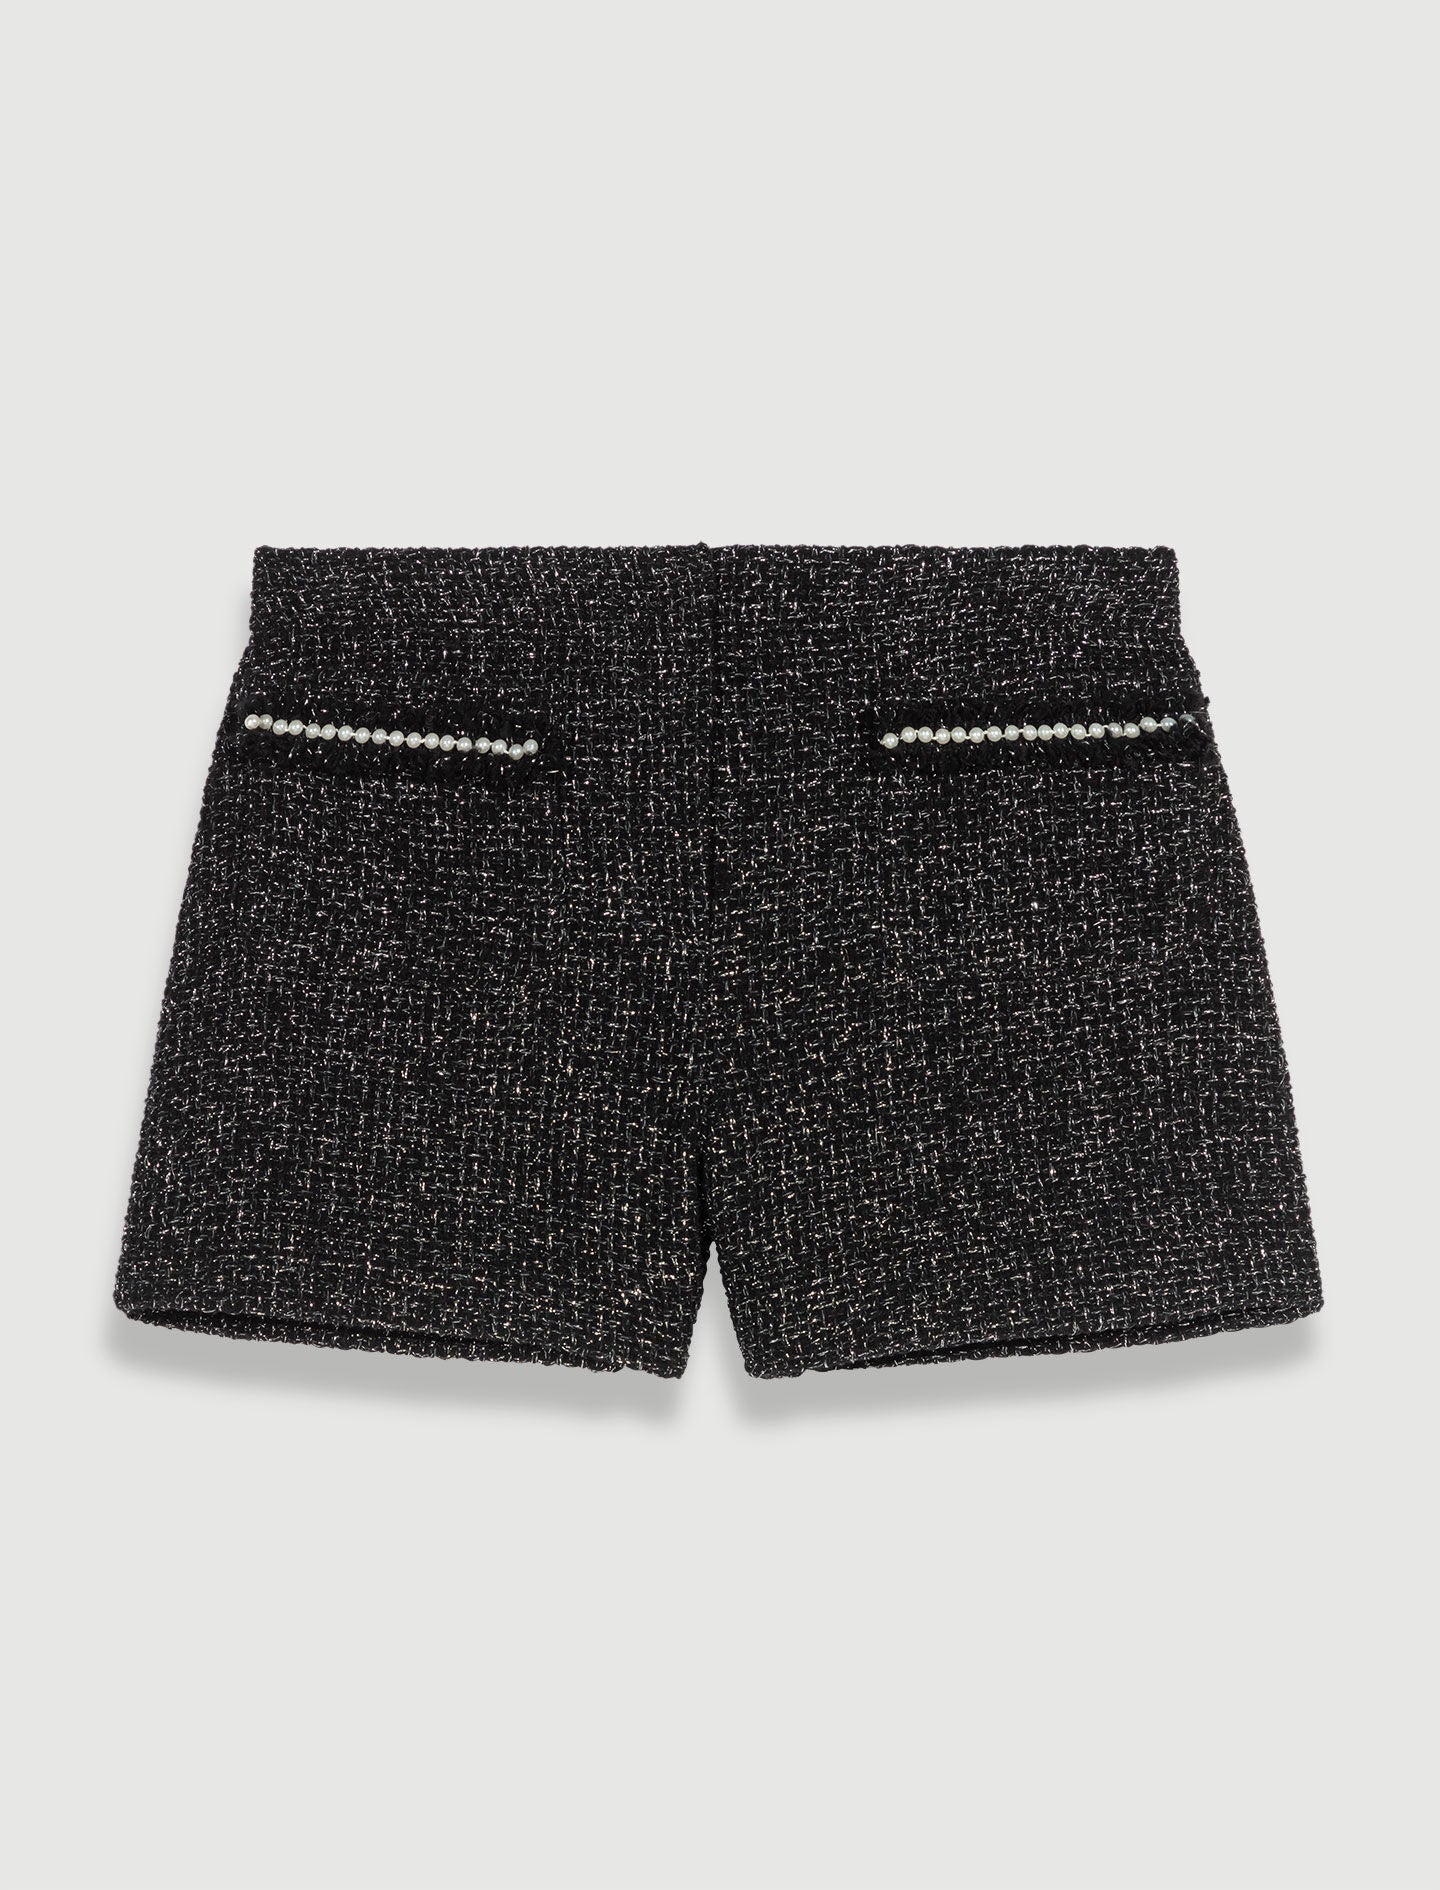 Black/Glitter glittery tweed shorts